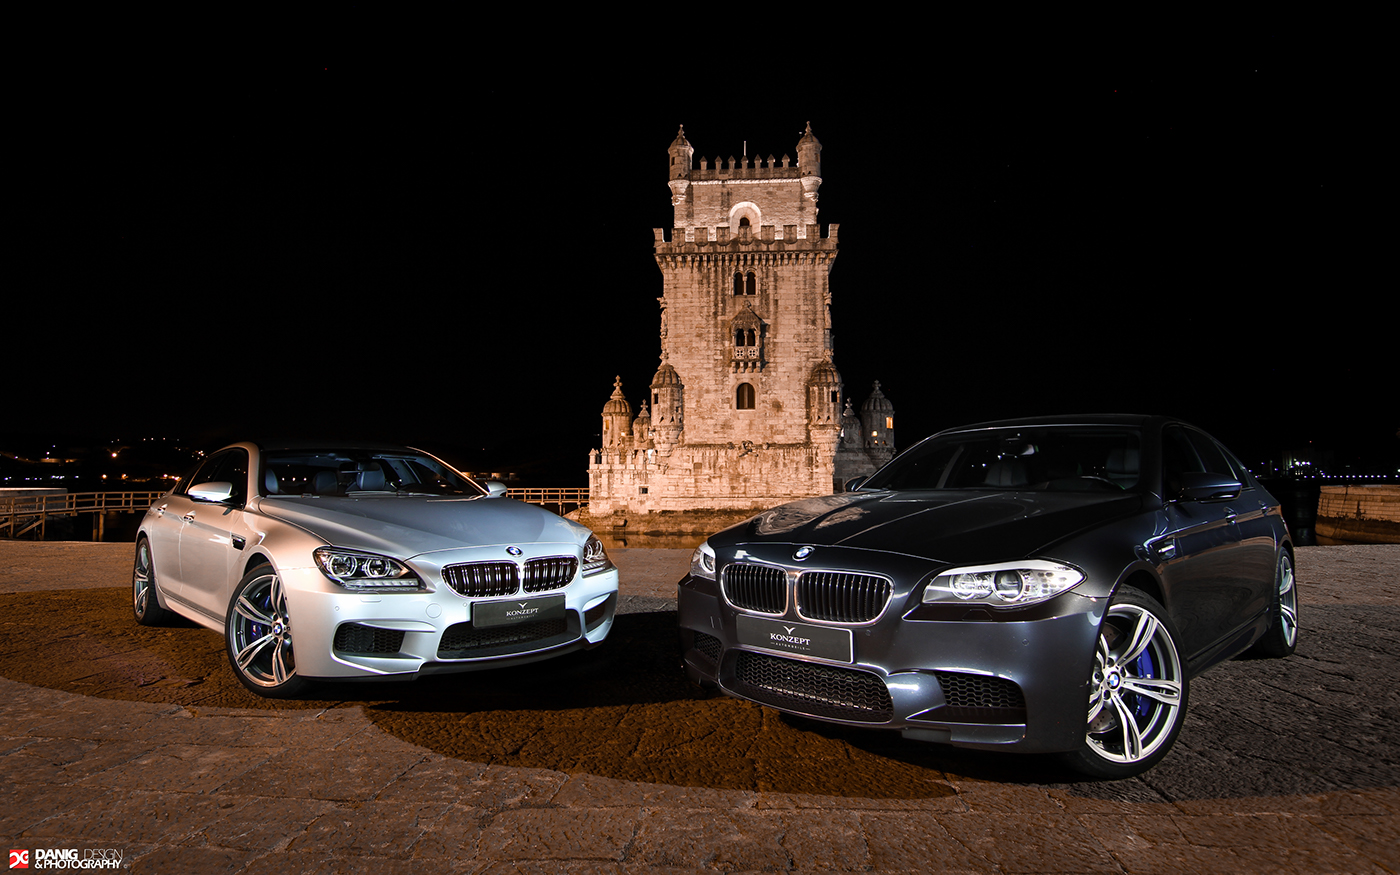 BMW m5 m6 f10 f12 photoshoot car Cars supercar GranCoupe night Portugal Lisbon Konzept belém